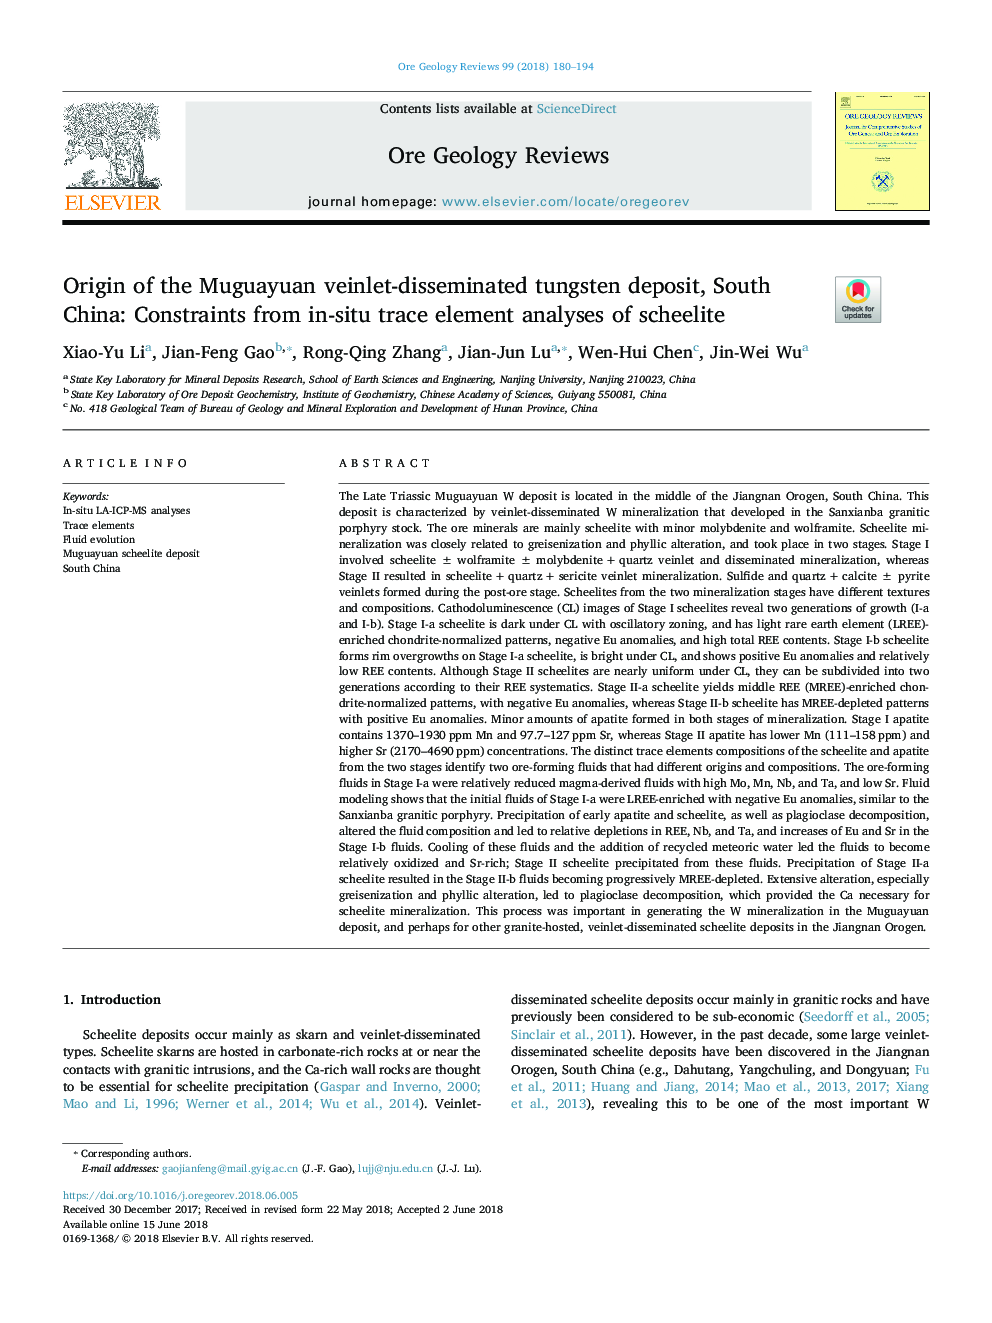 Origin of the Muguayuan veinlet-disseminated tungsten deposit, South China: Constraints from in-situ trace element analyses of scheelite